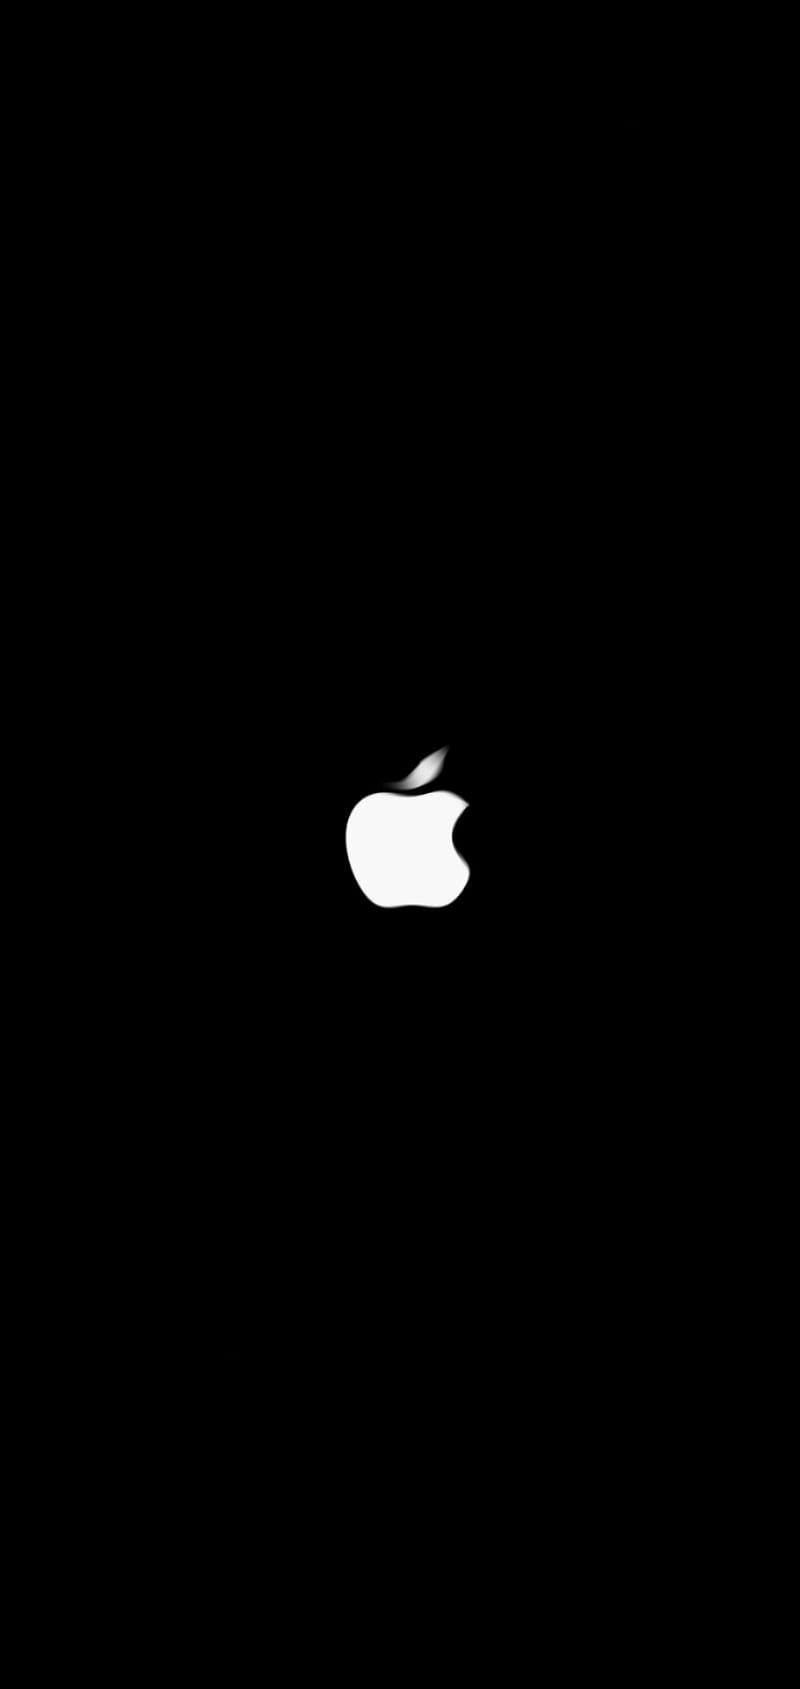 A p p l e, apple, apple iphone, black, dark, iphone, iphone 12, logo ...